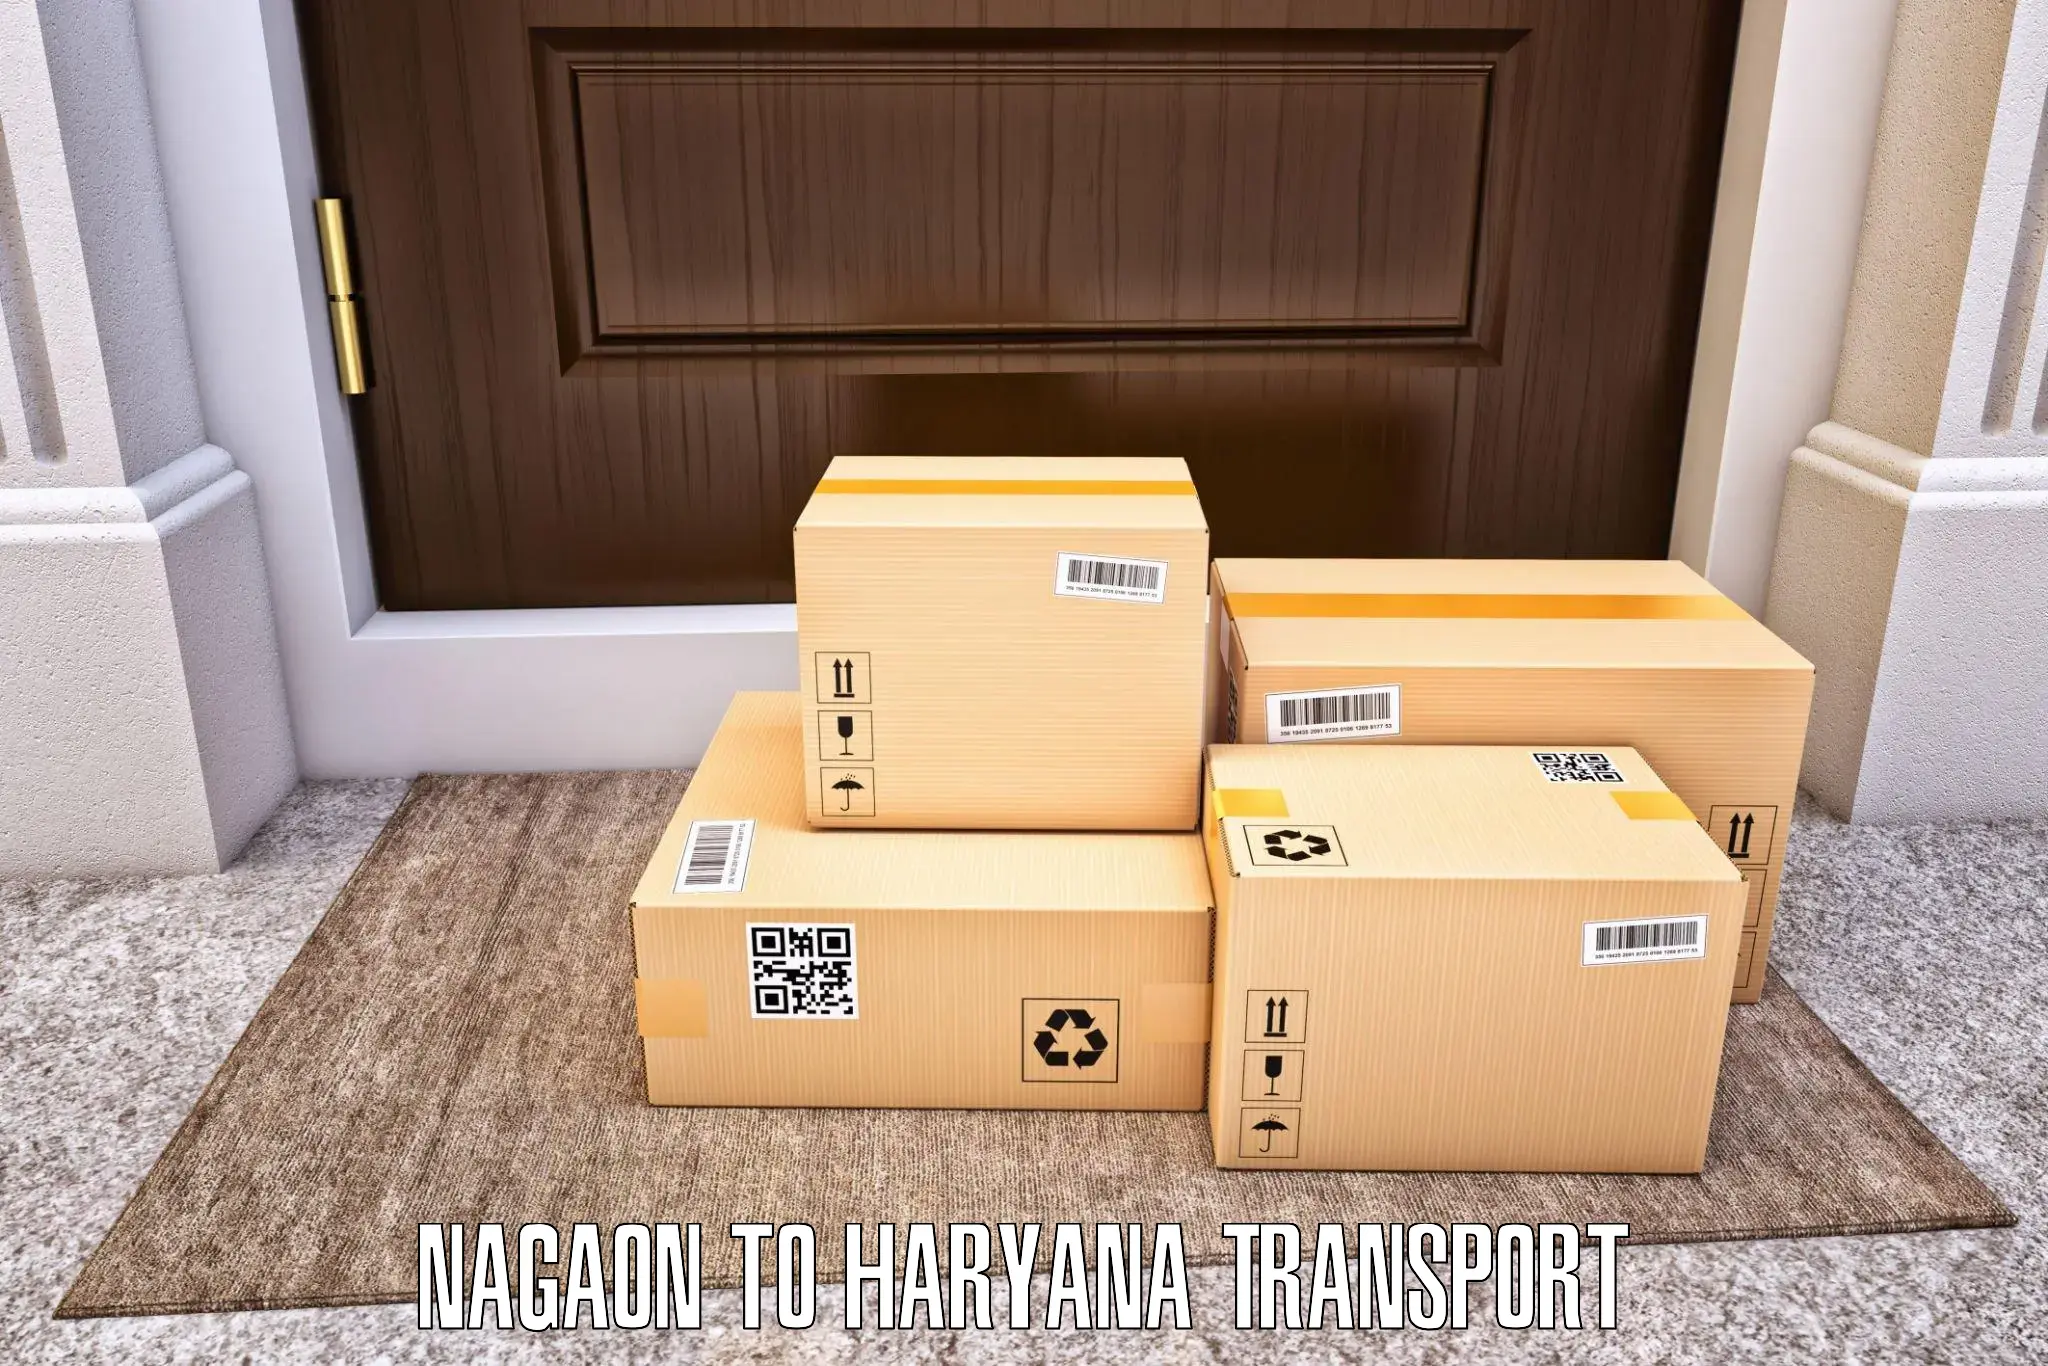 Vehicle transport services in Nagaon to Hansi